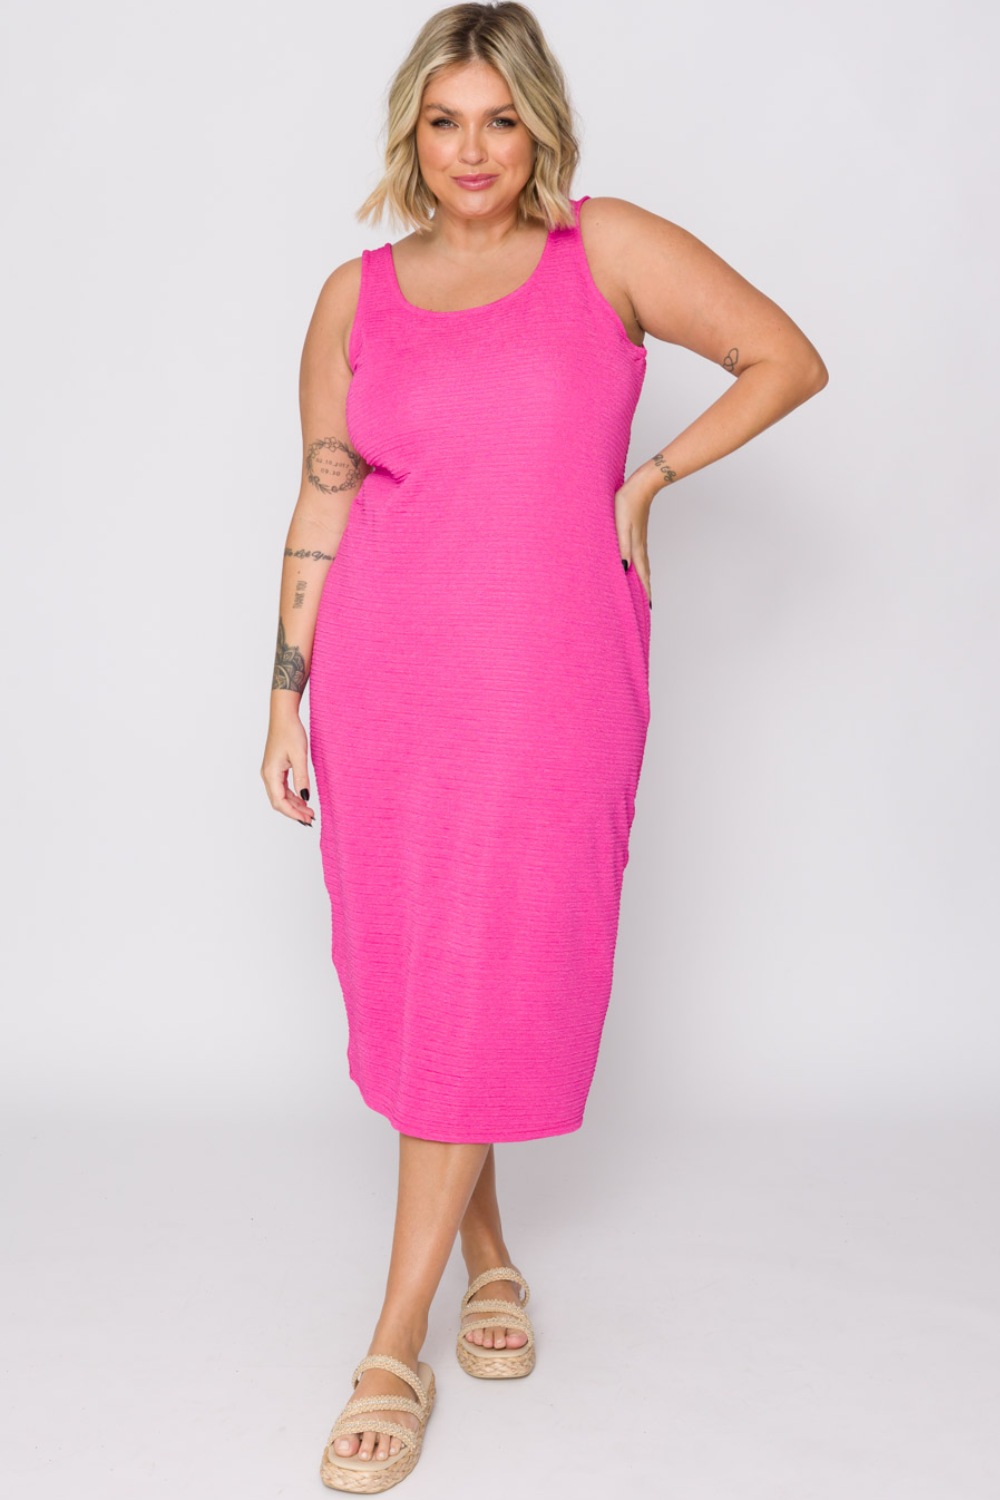 Vestido Plus Size Regata Bethany Pink Cess